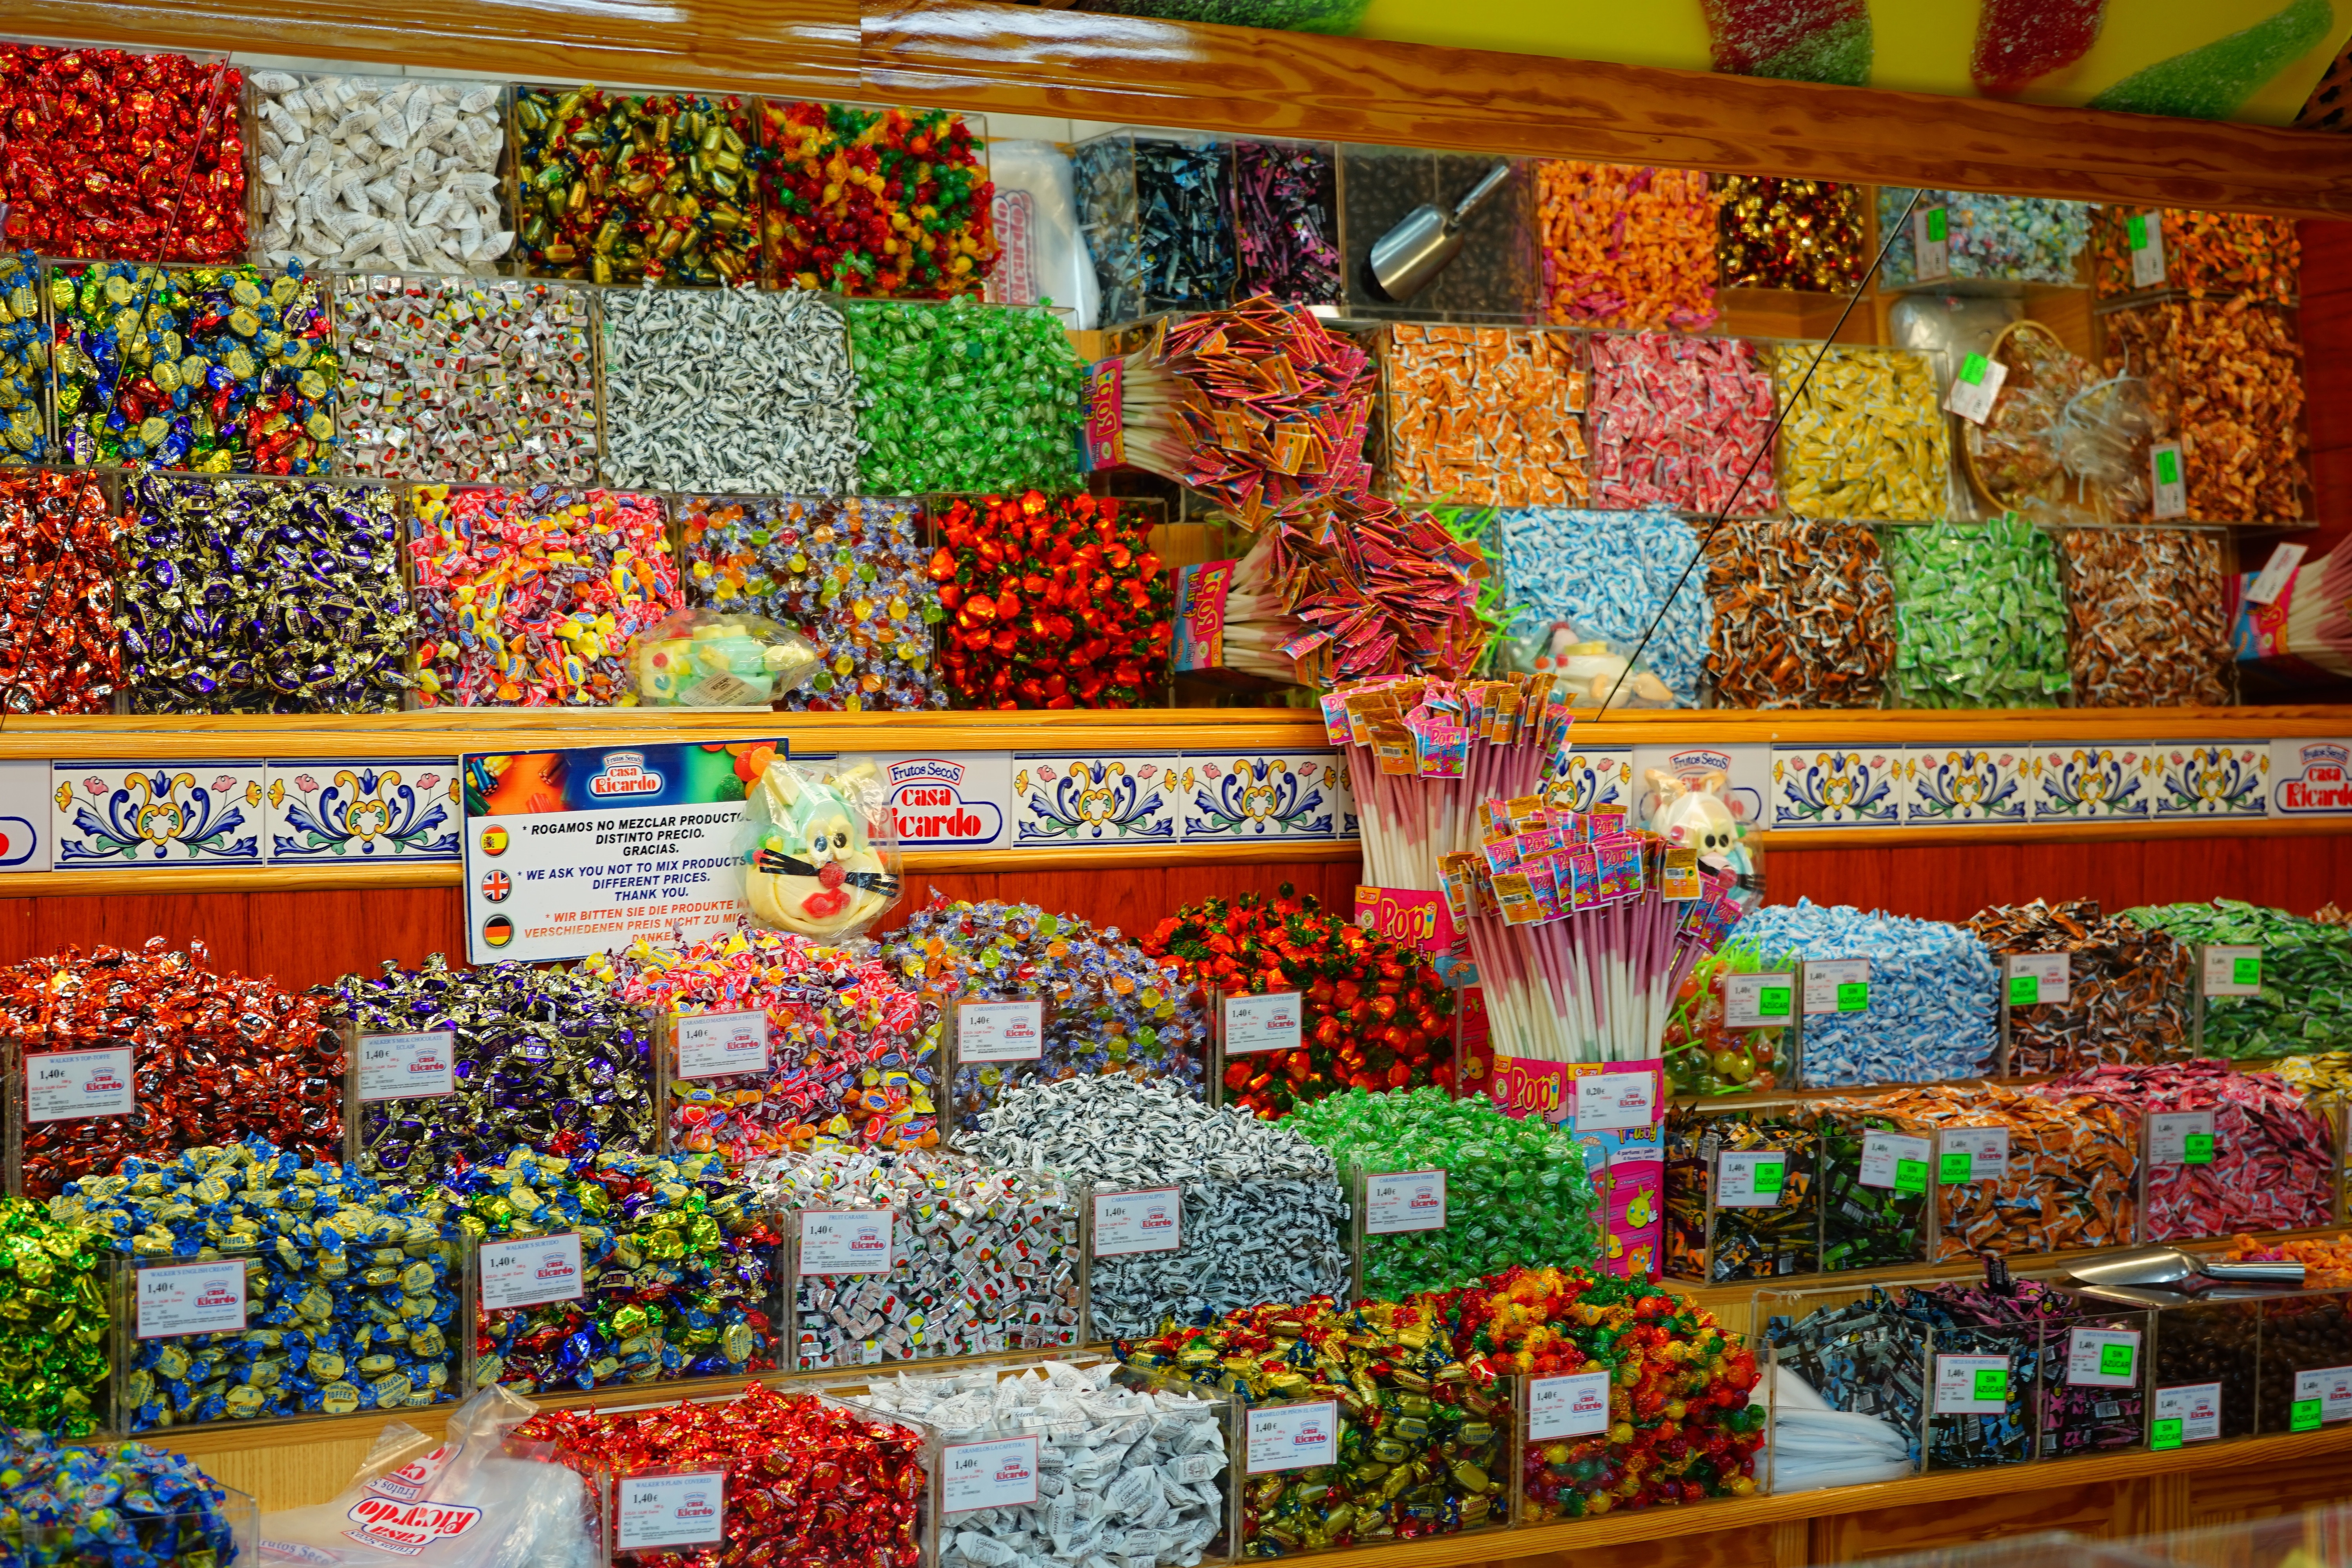 assorted candies